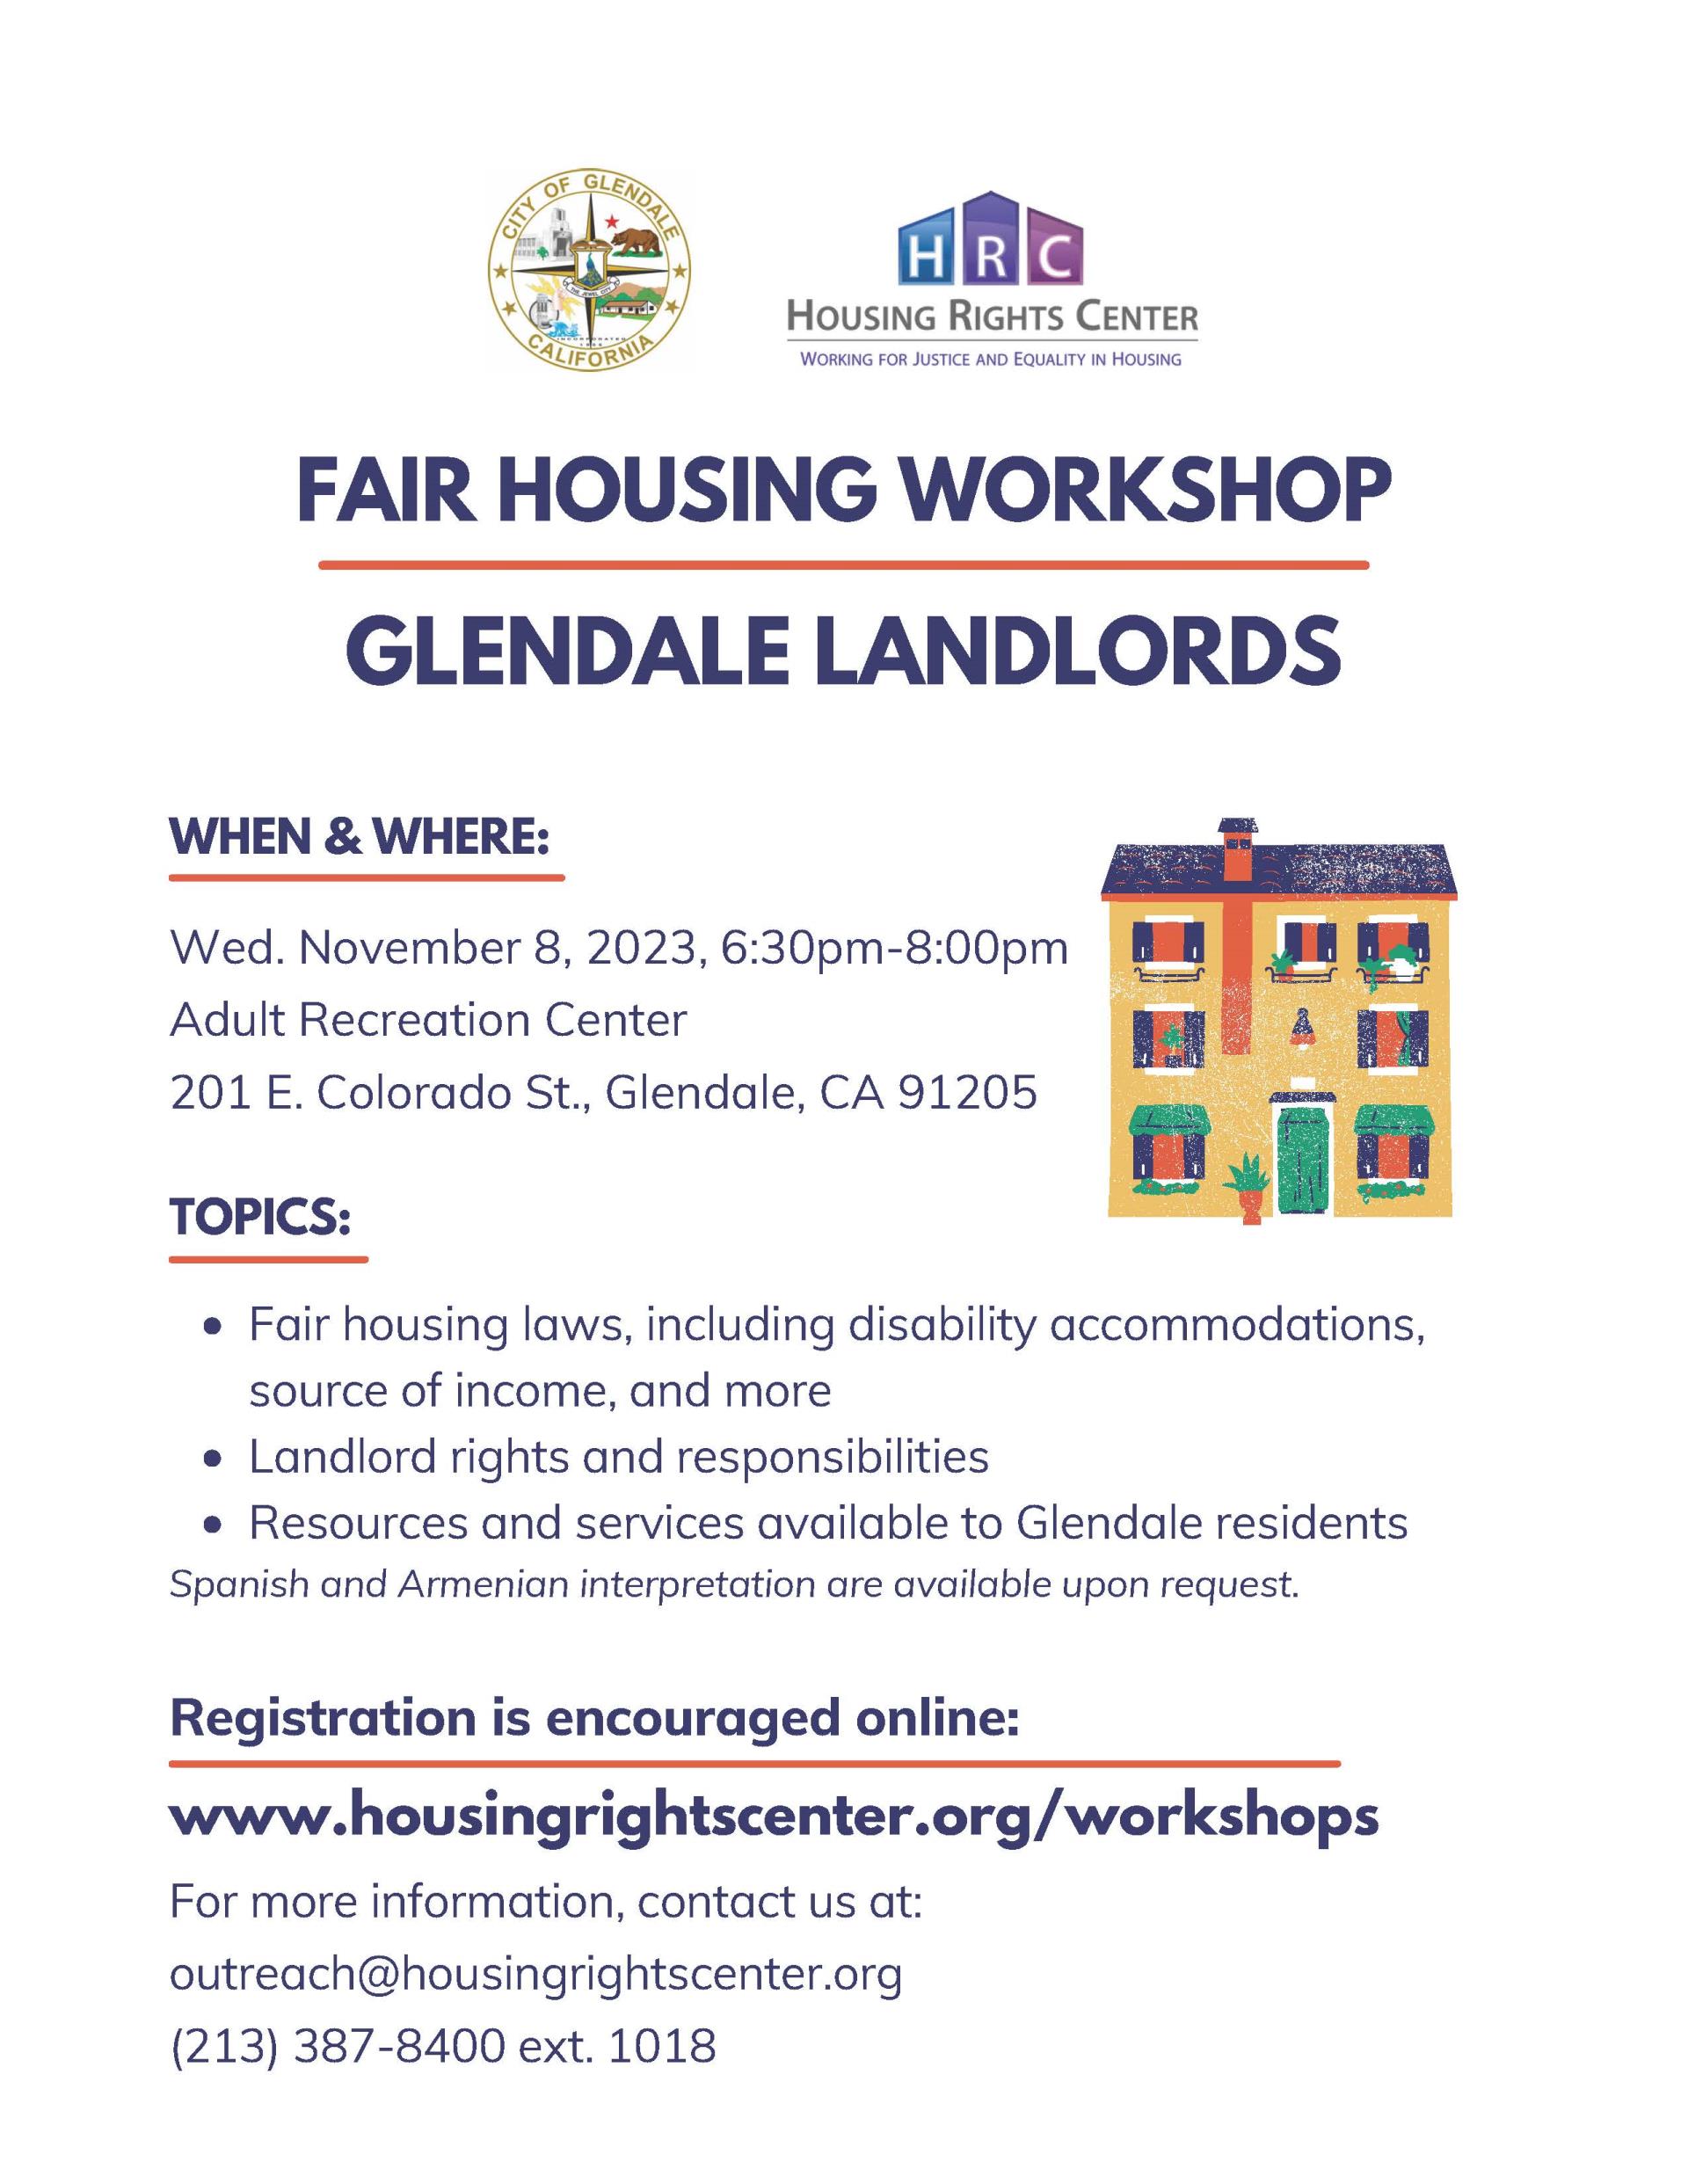 Glendale Landlords Fair Housing Workshop Flyer (English) (002)